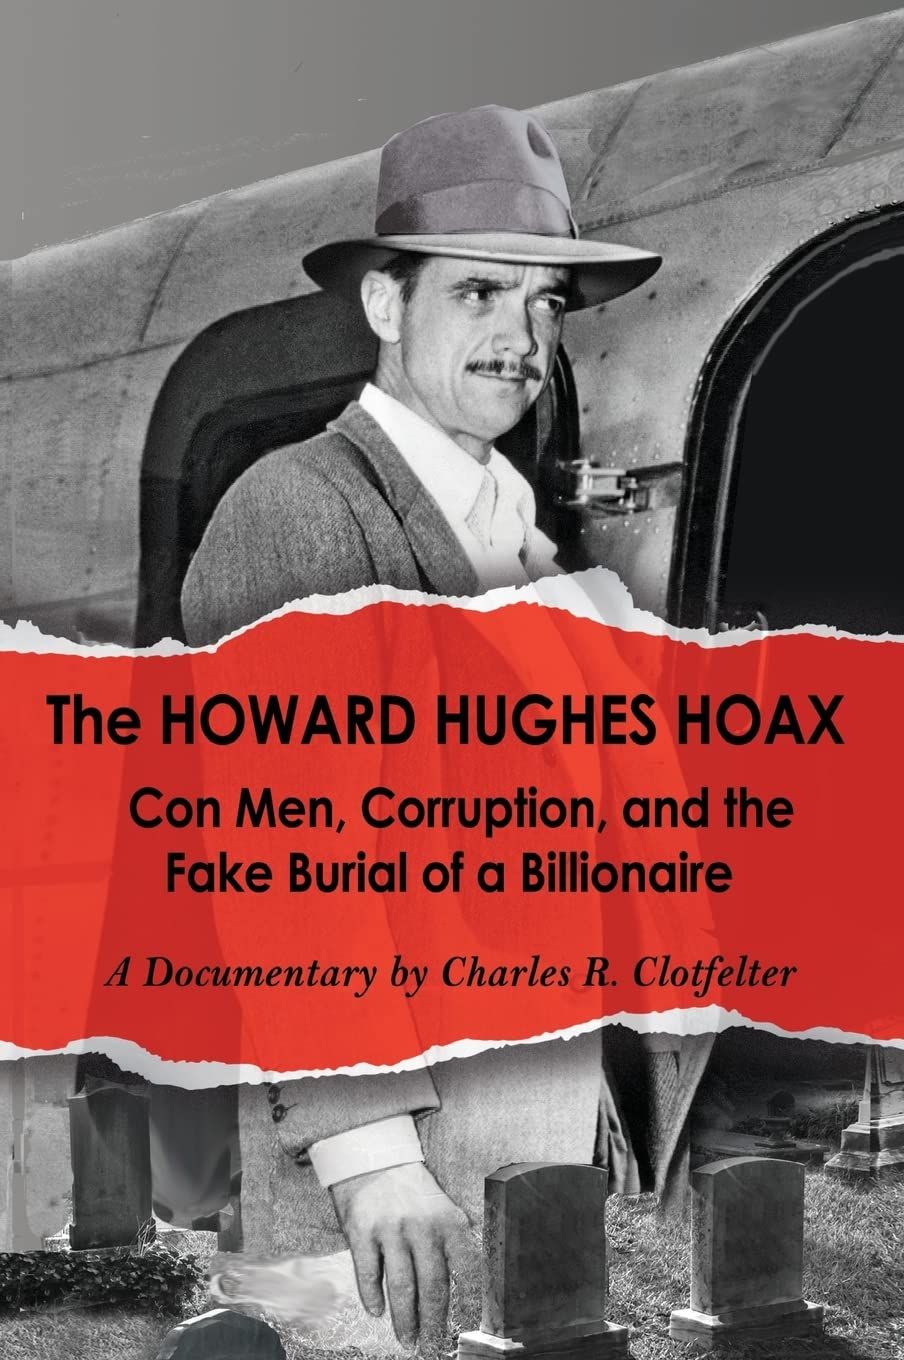 Charles Clotfelter presents "THE HOWARD HUGHES HOAX"....